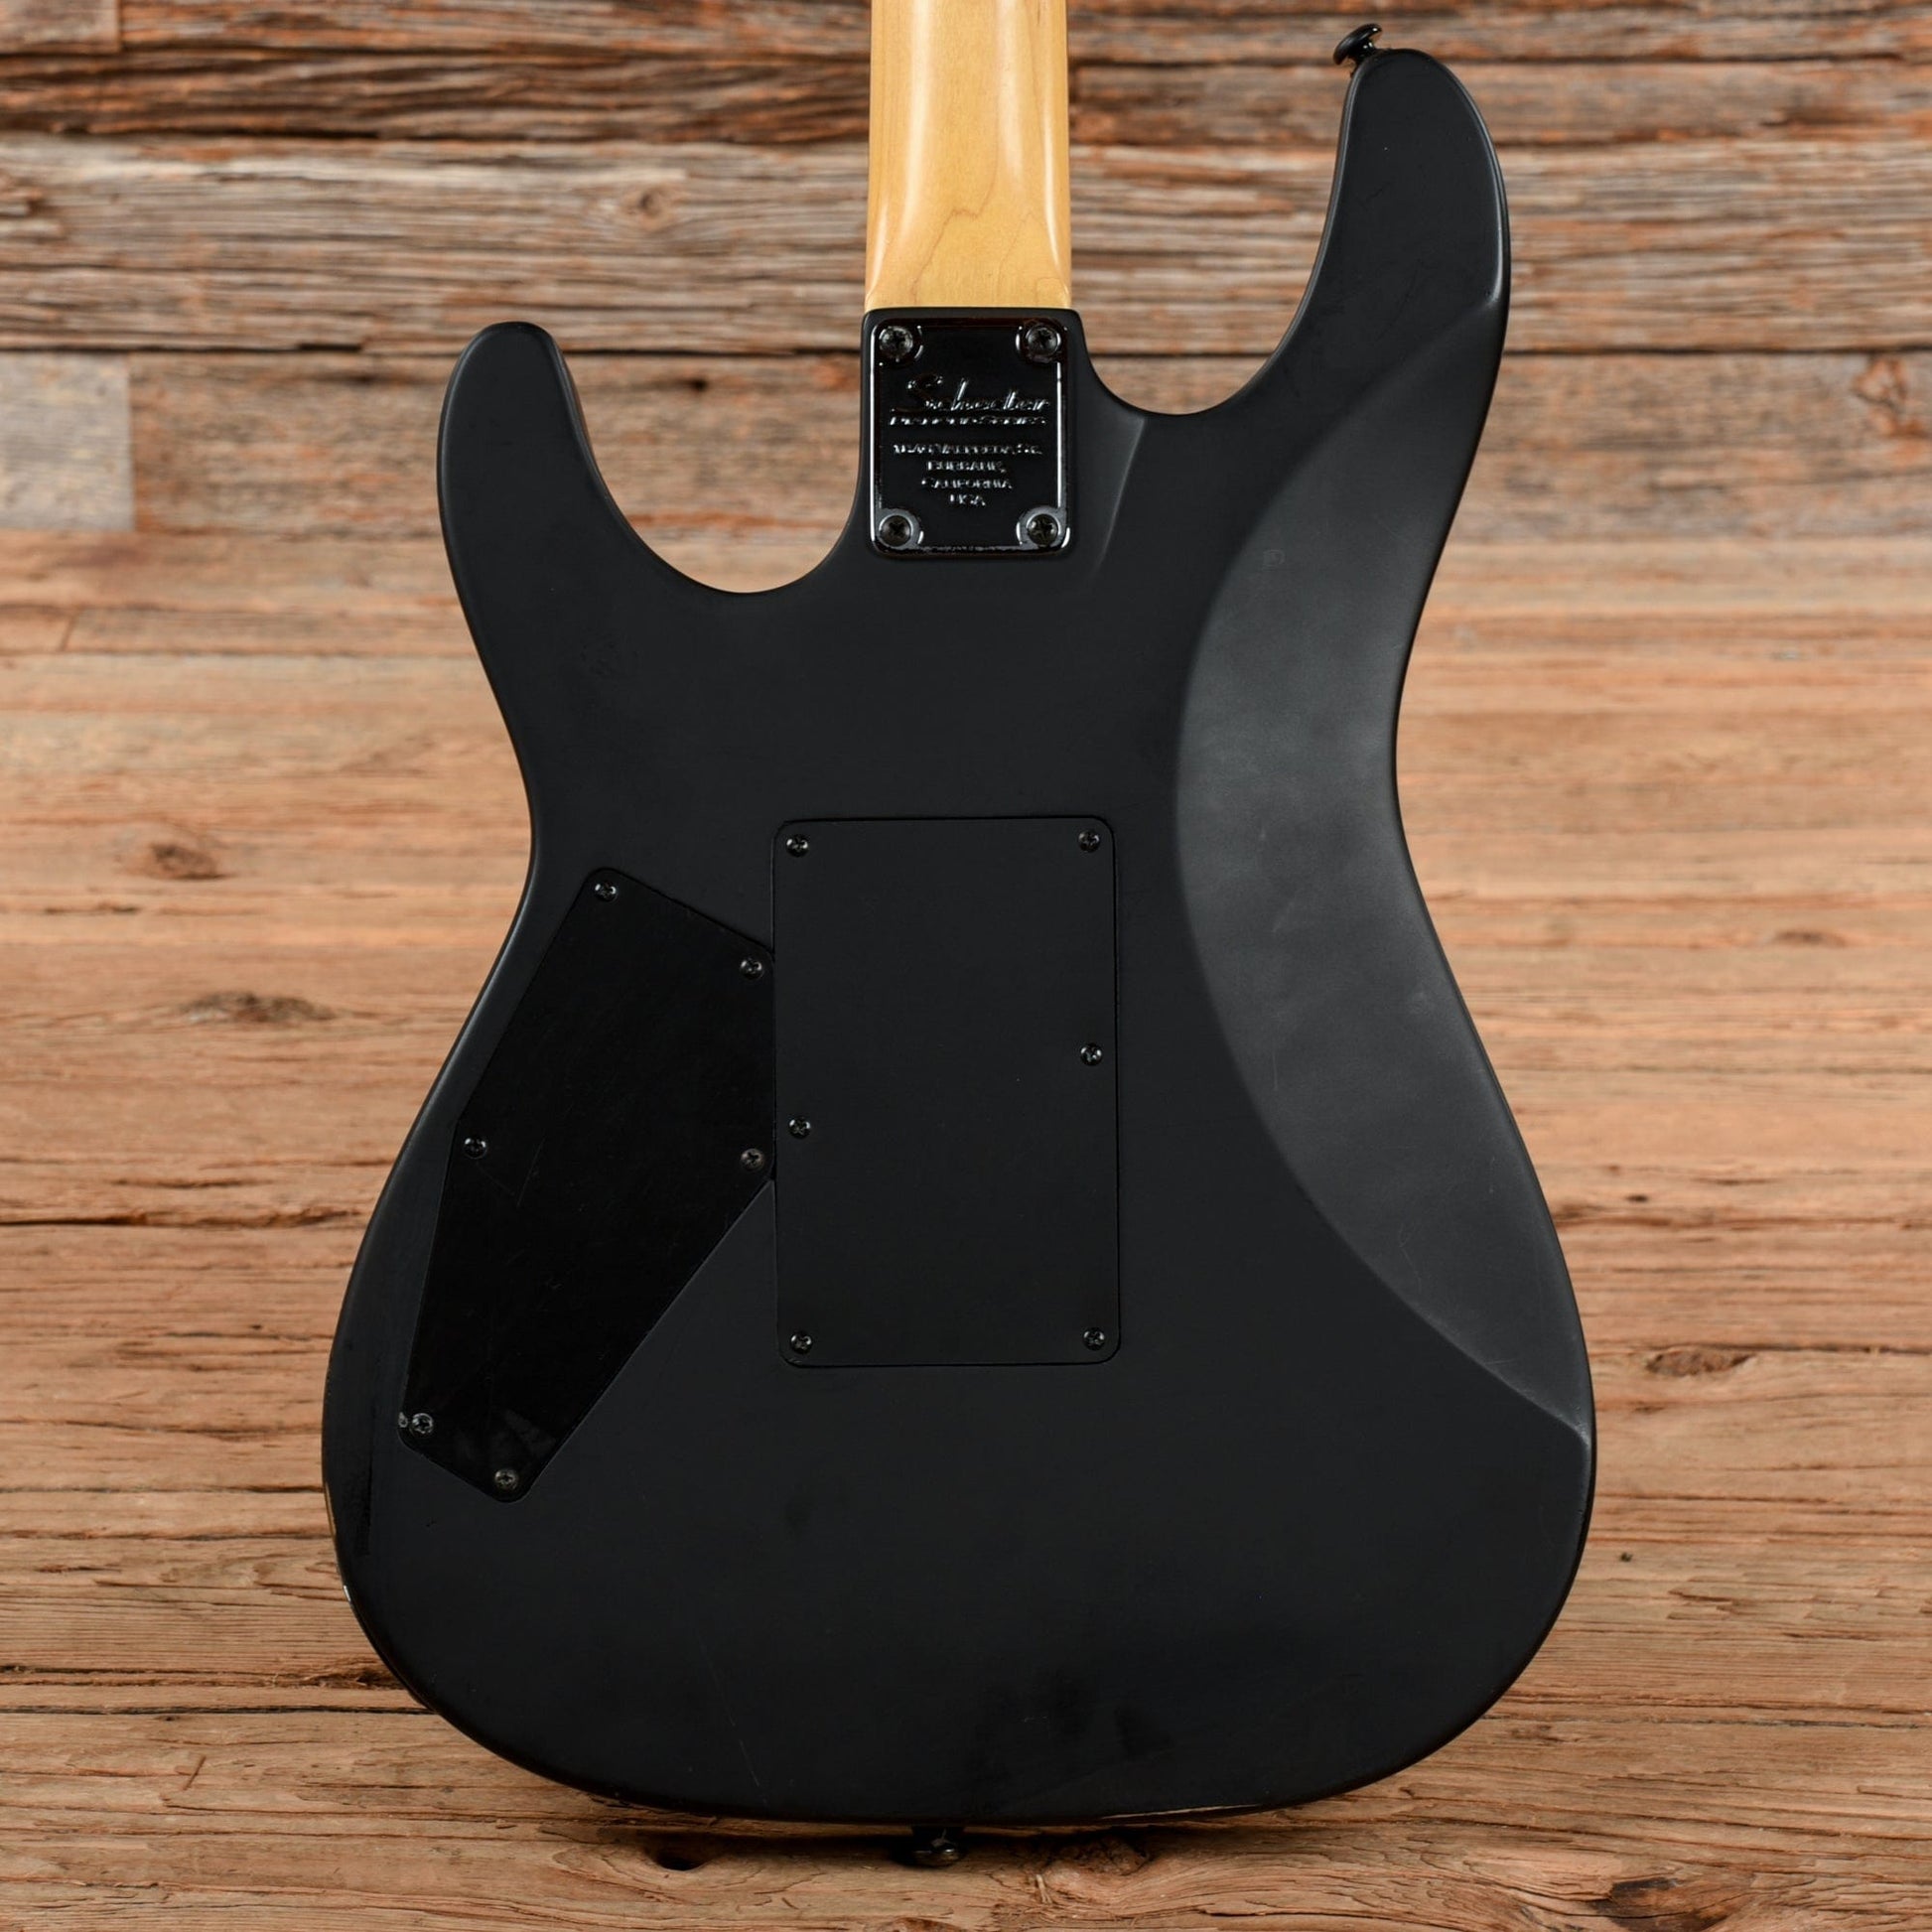 Schecter Diamon Series Black Electric Guitars / Solid Body